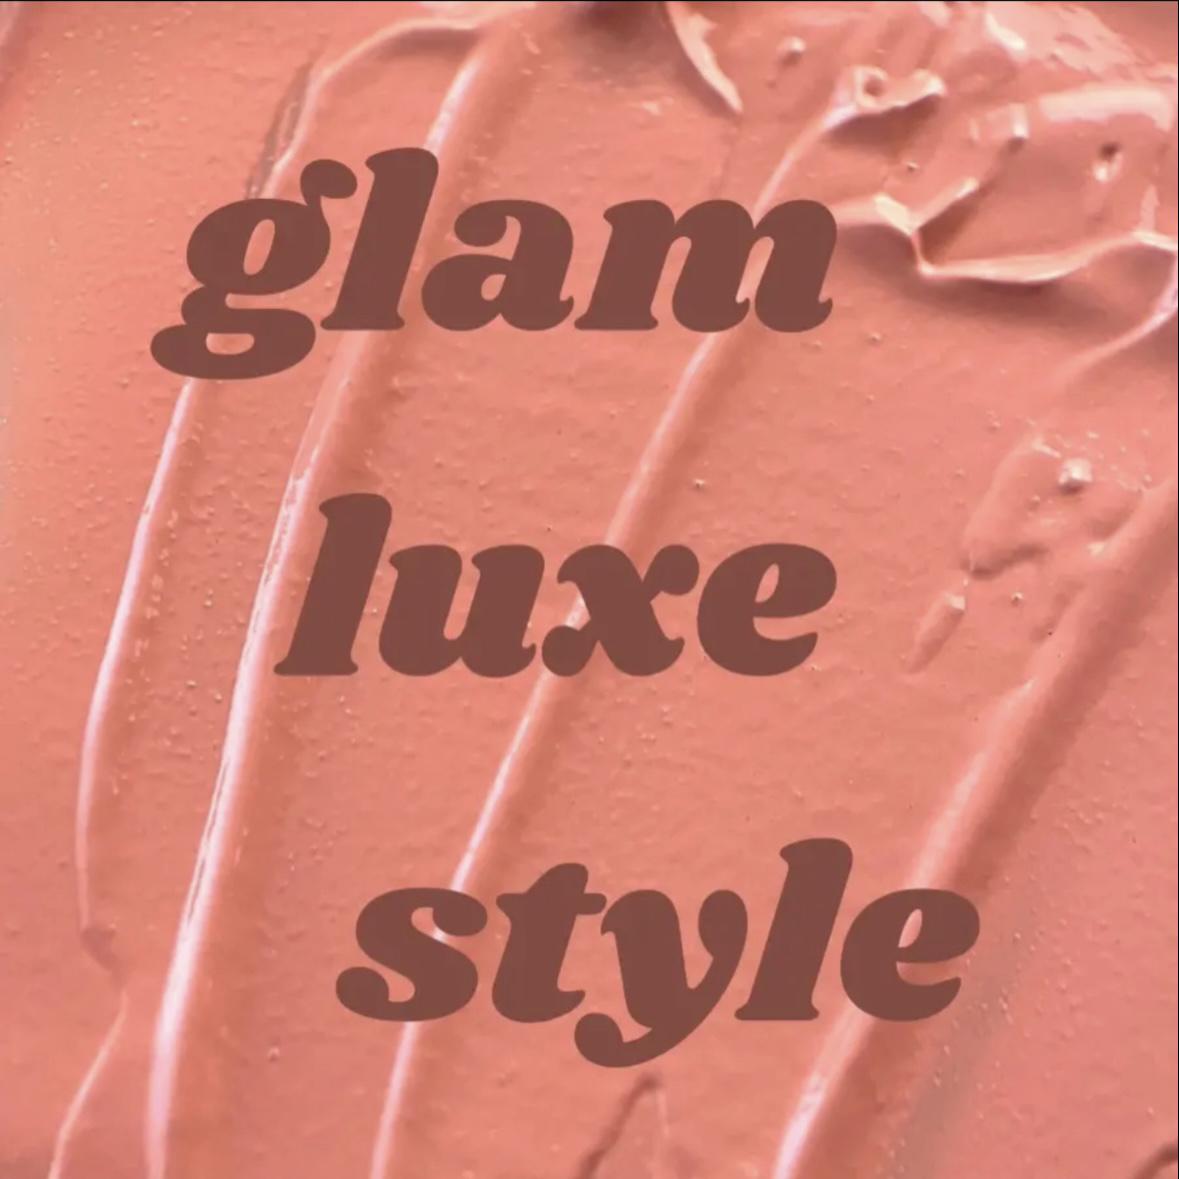 glamluxestyle's images